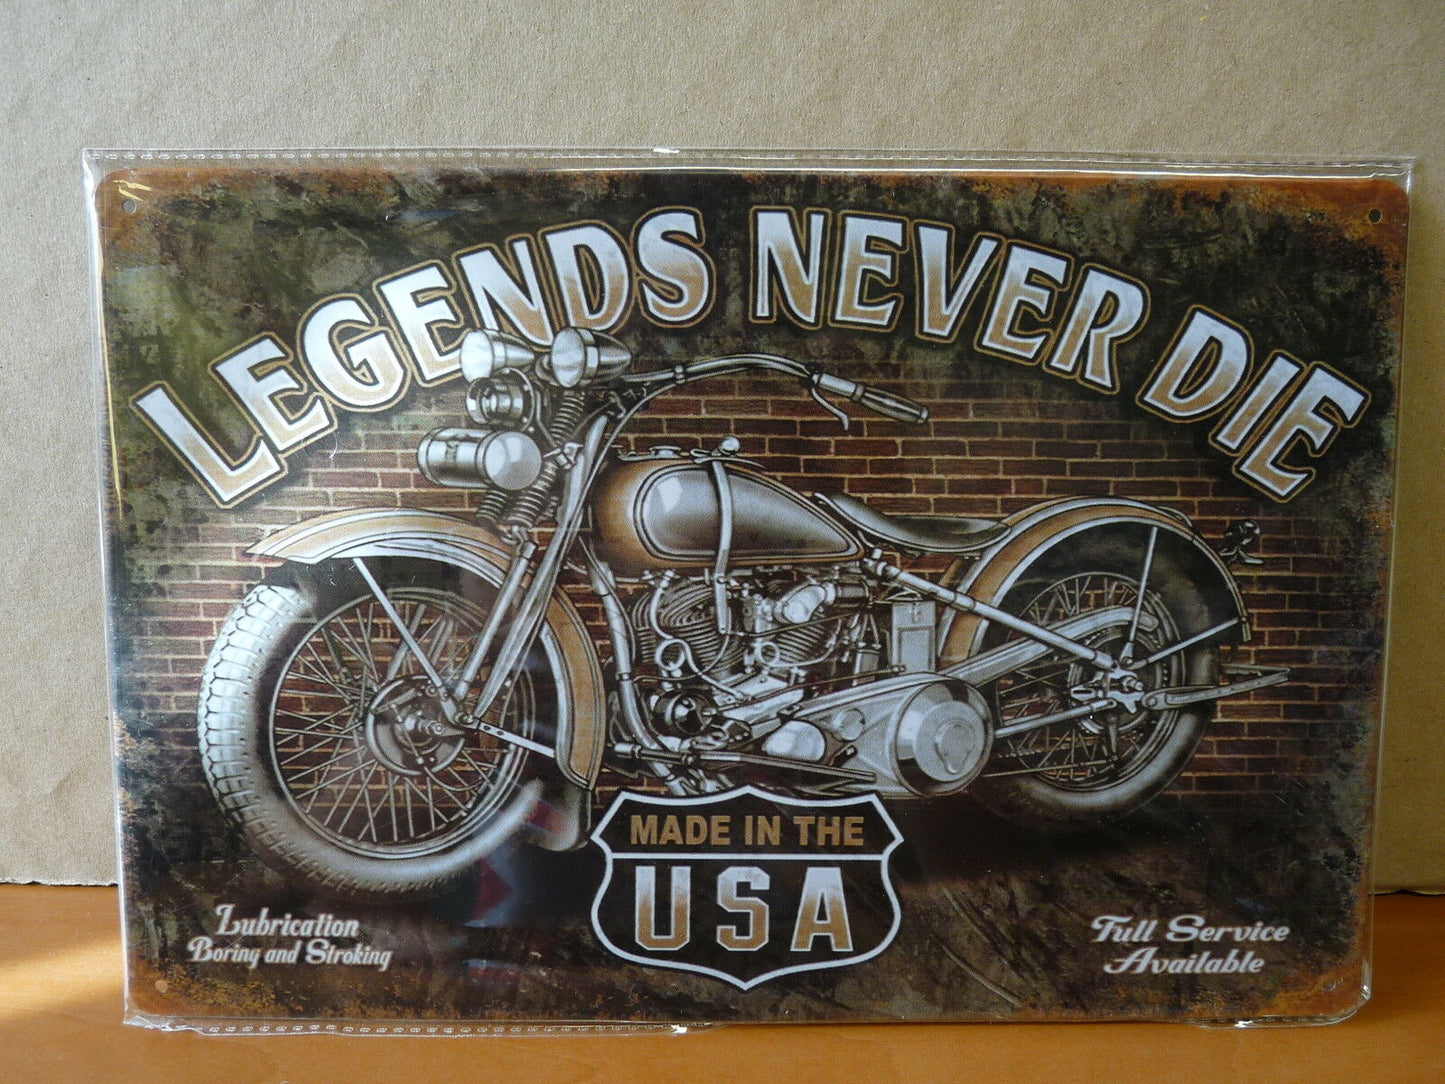 PA72 PLAQUES TOLEE vintage 20 X 30 cm : LEGENDS NEVER DIE moto motorcycle USA